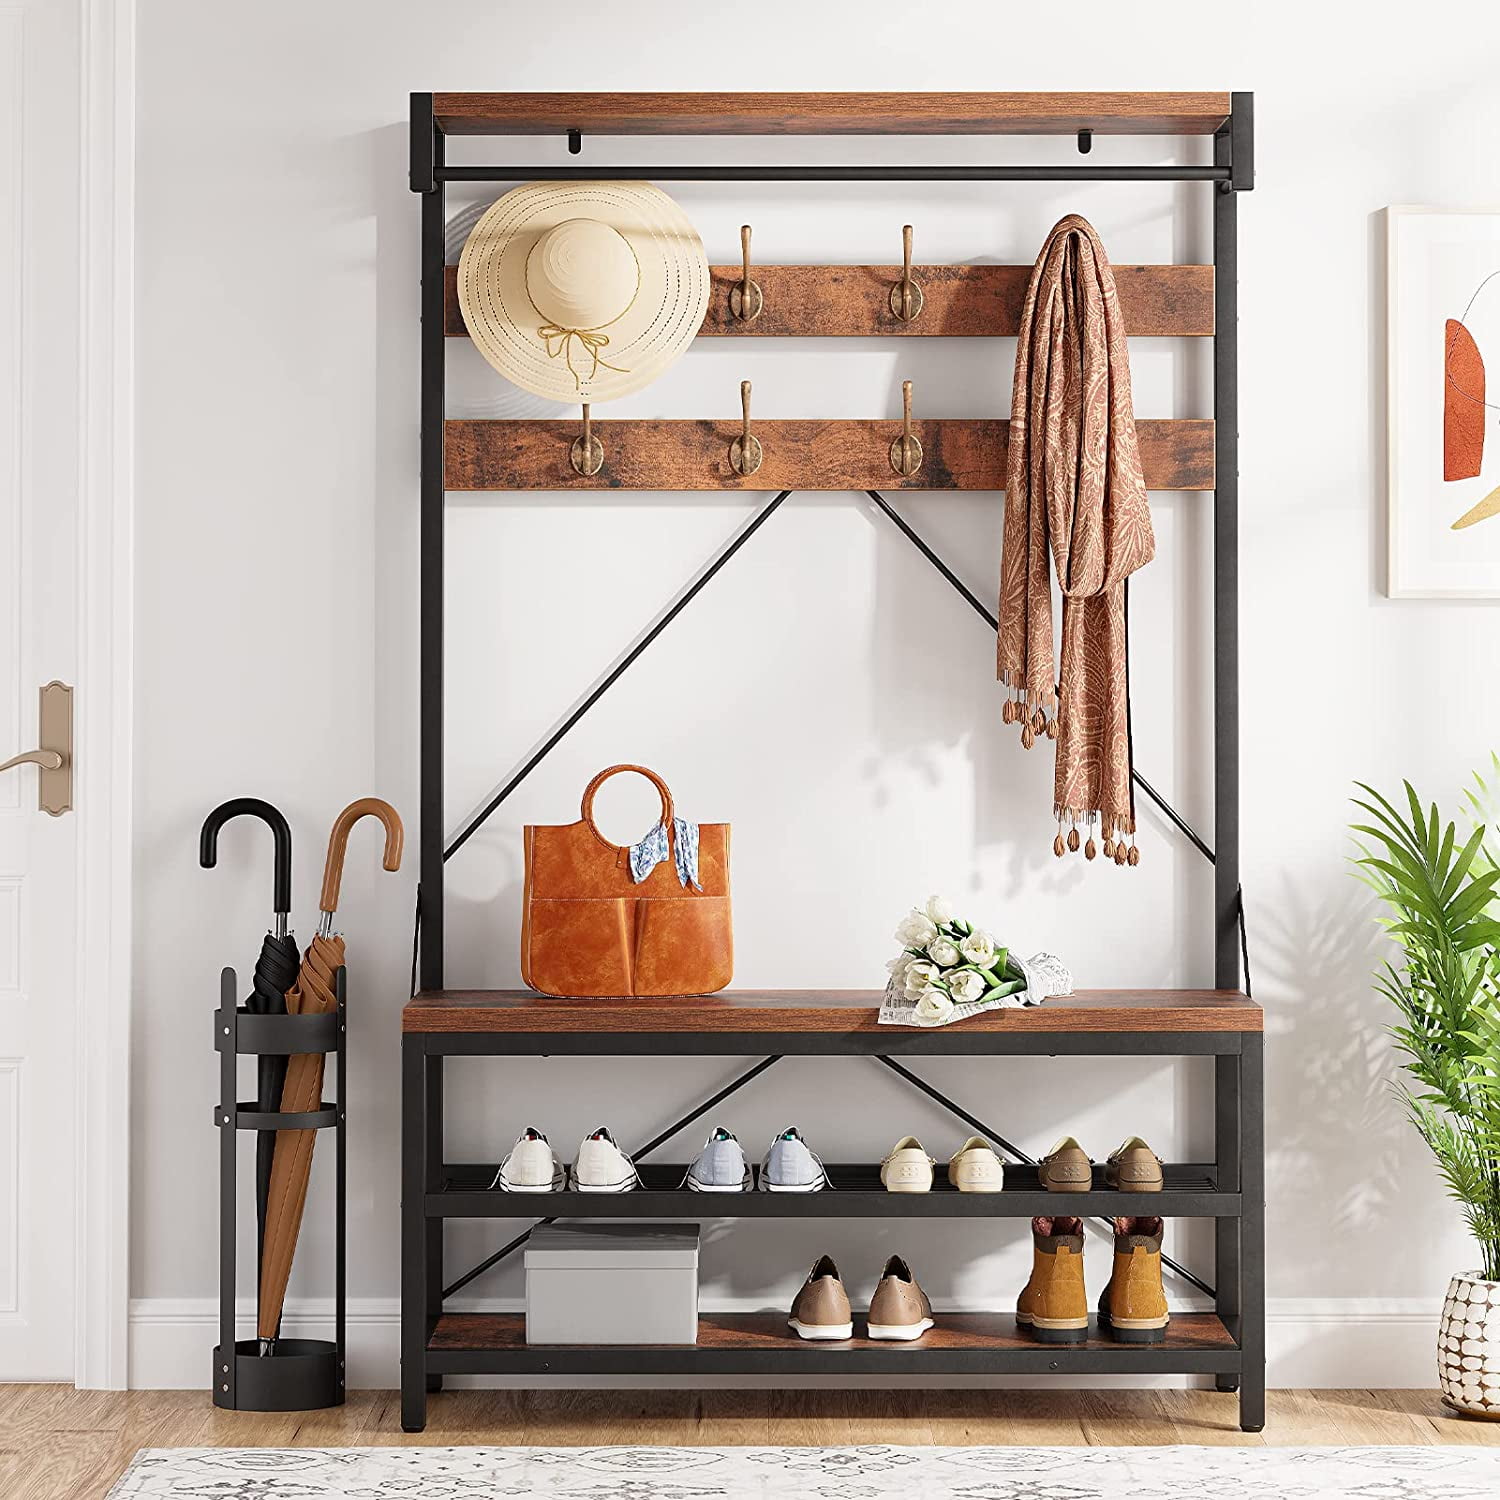 Essential Entryway Shelf with Hooks